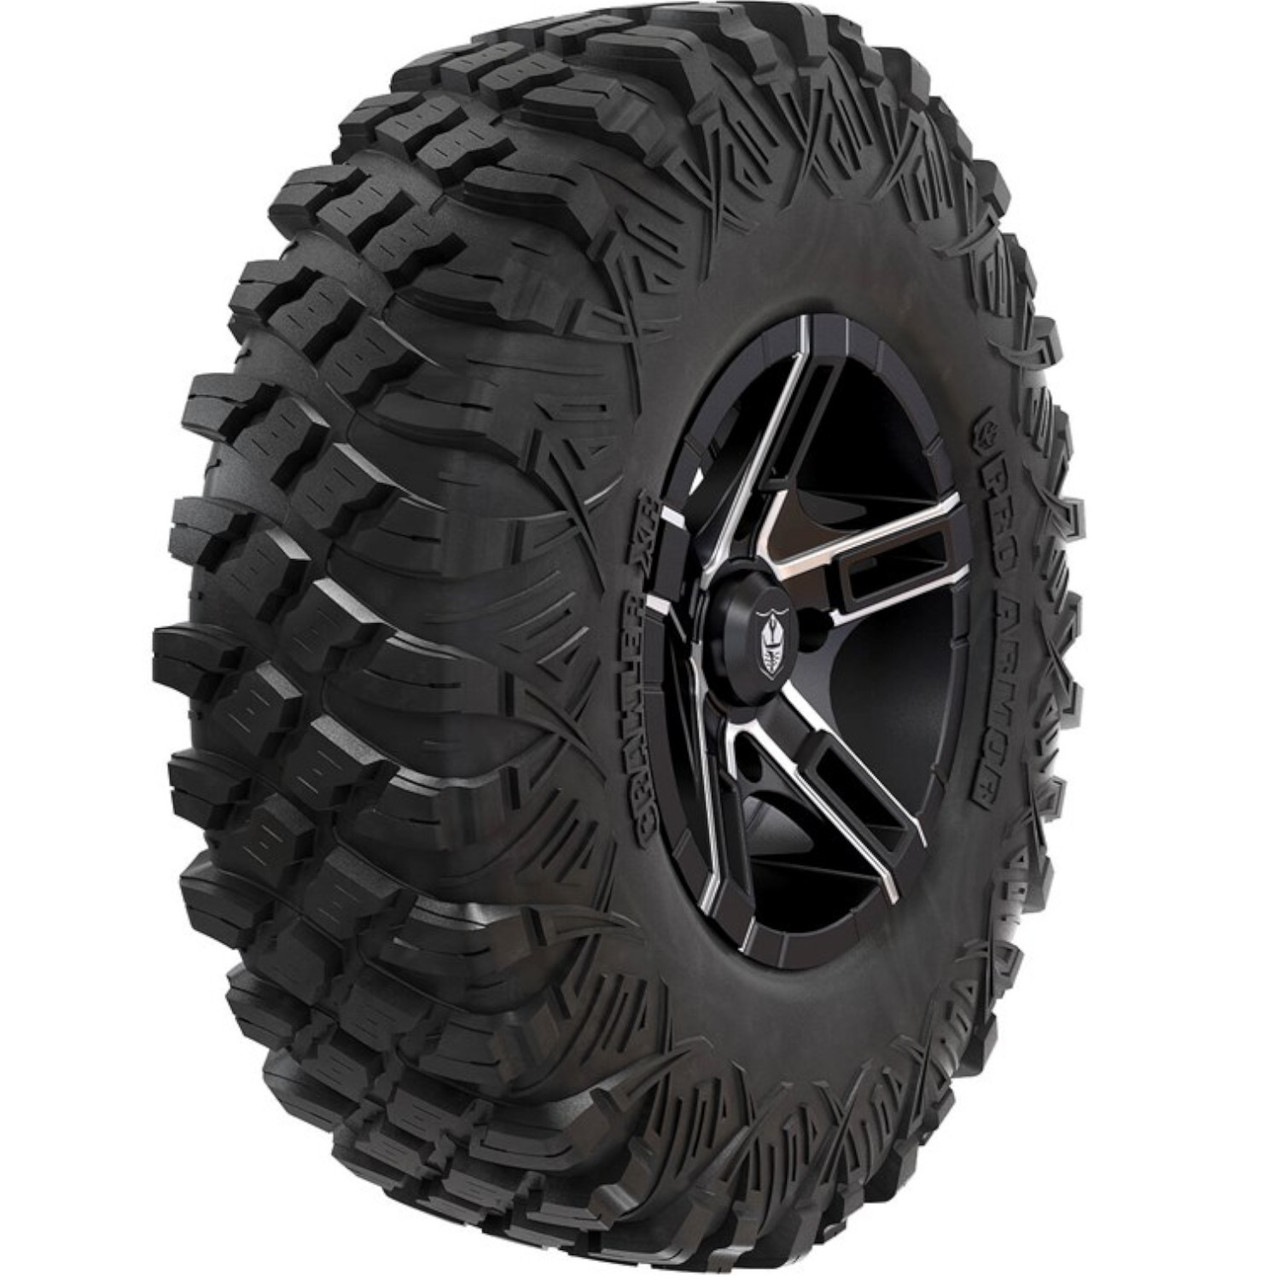 Polaris New OEM, Pro Wheel & Tire Set, Accent Flare & Crawler XR, 33R15, 2884737